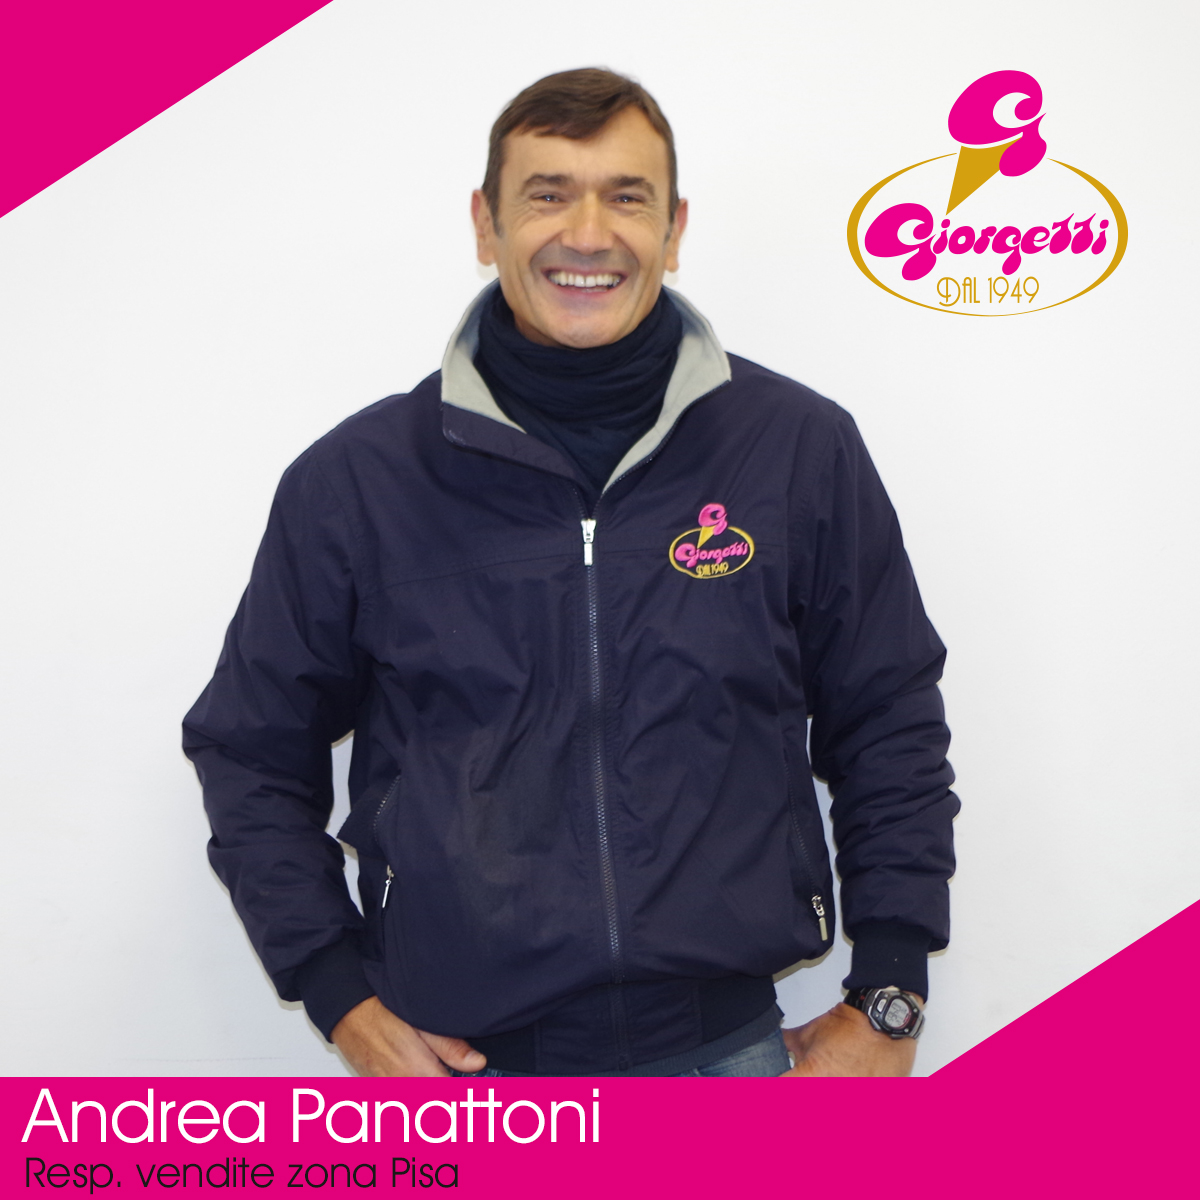 Andrea Panattoni